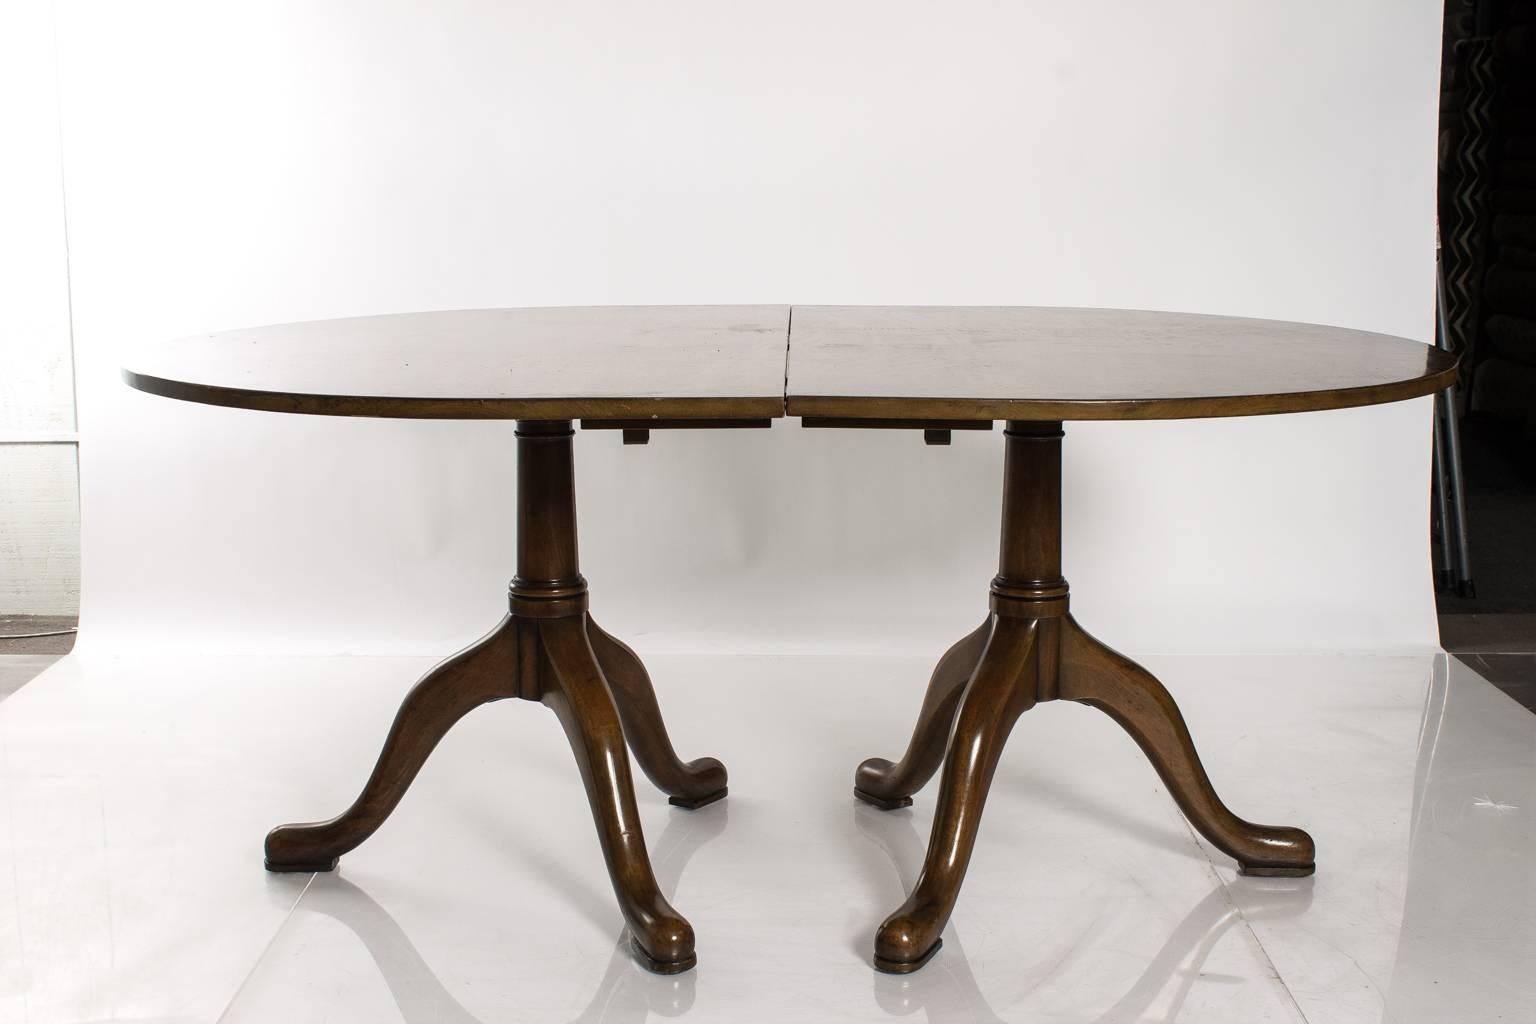 Late 19th Century Queen Anne Pedestal Table